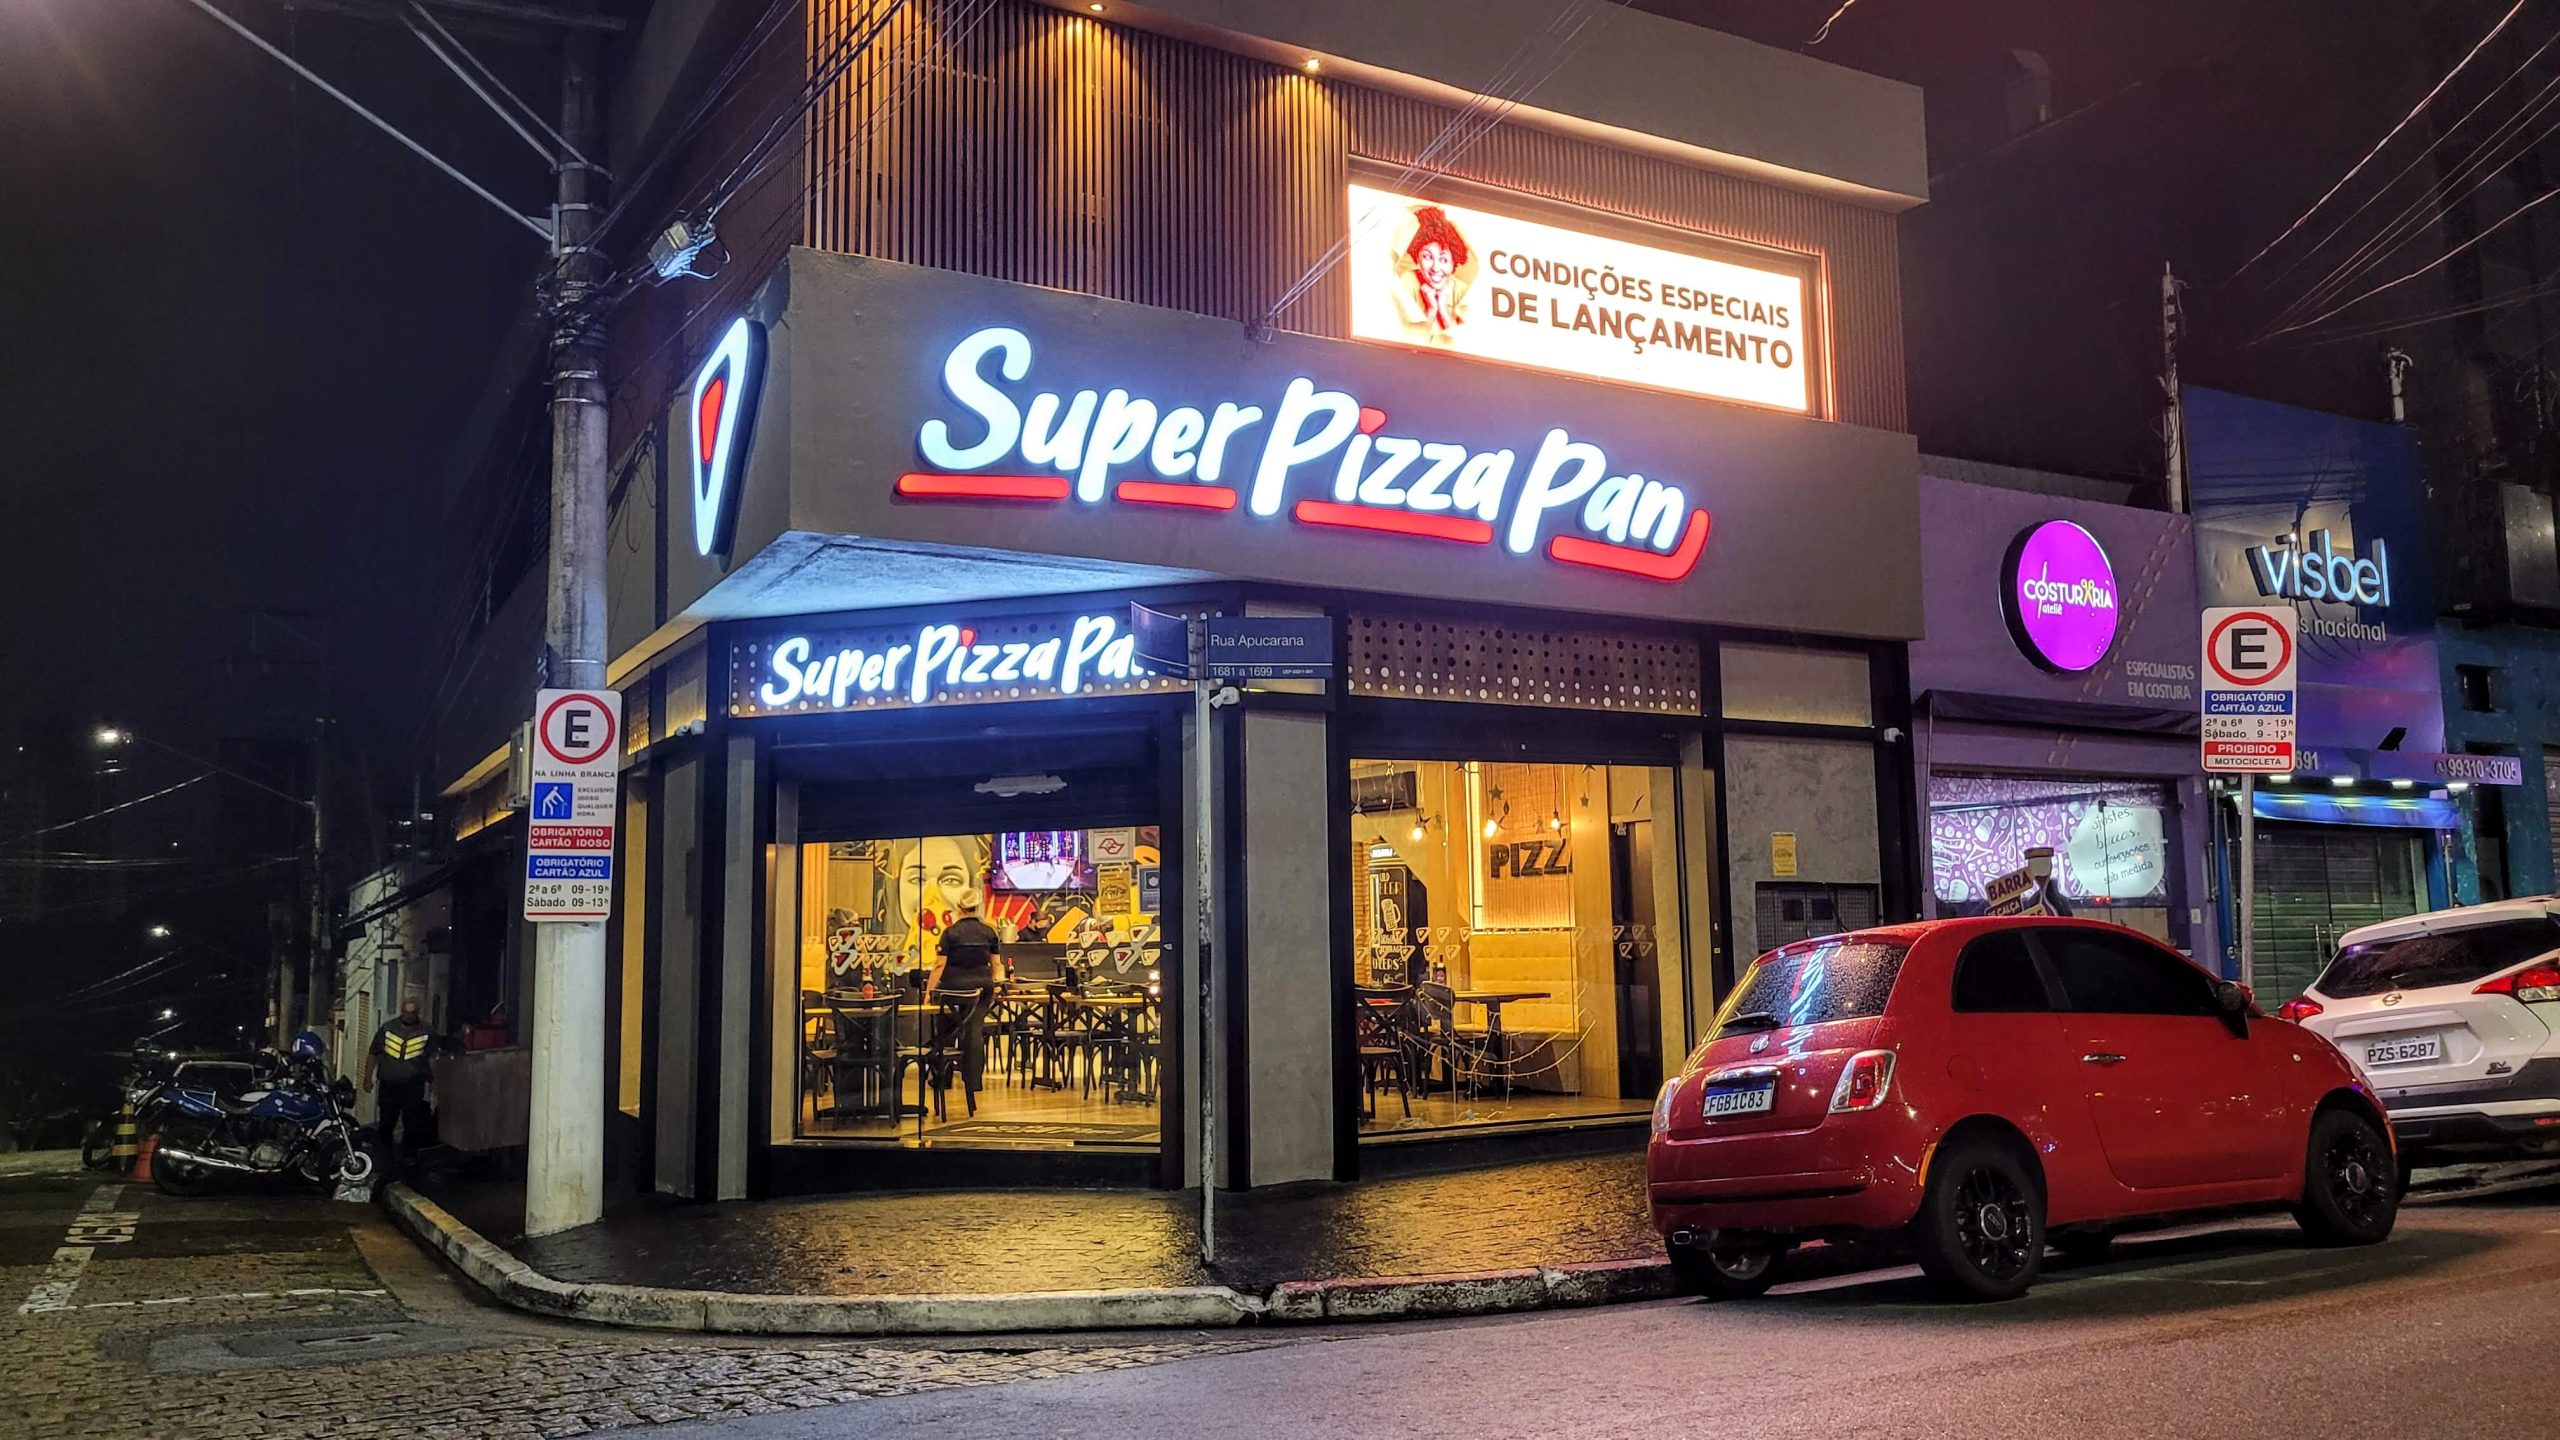 Super Pizza Pan em São Paulo Cardápio